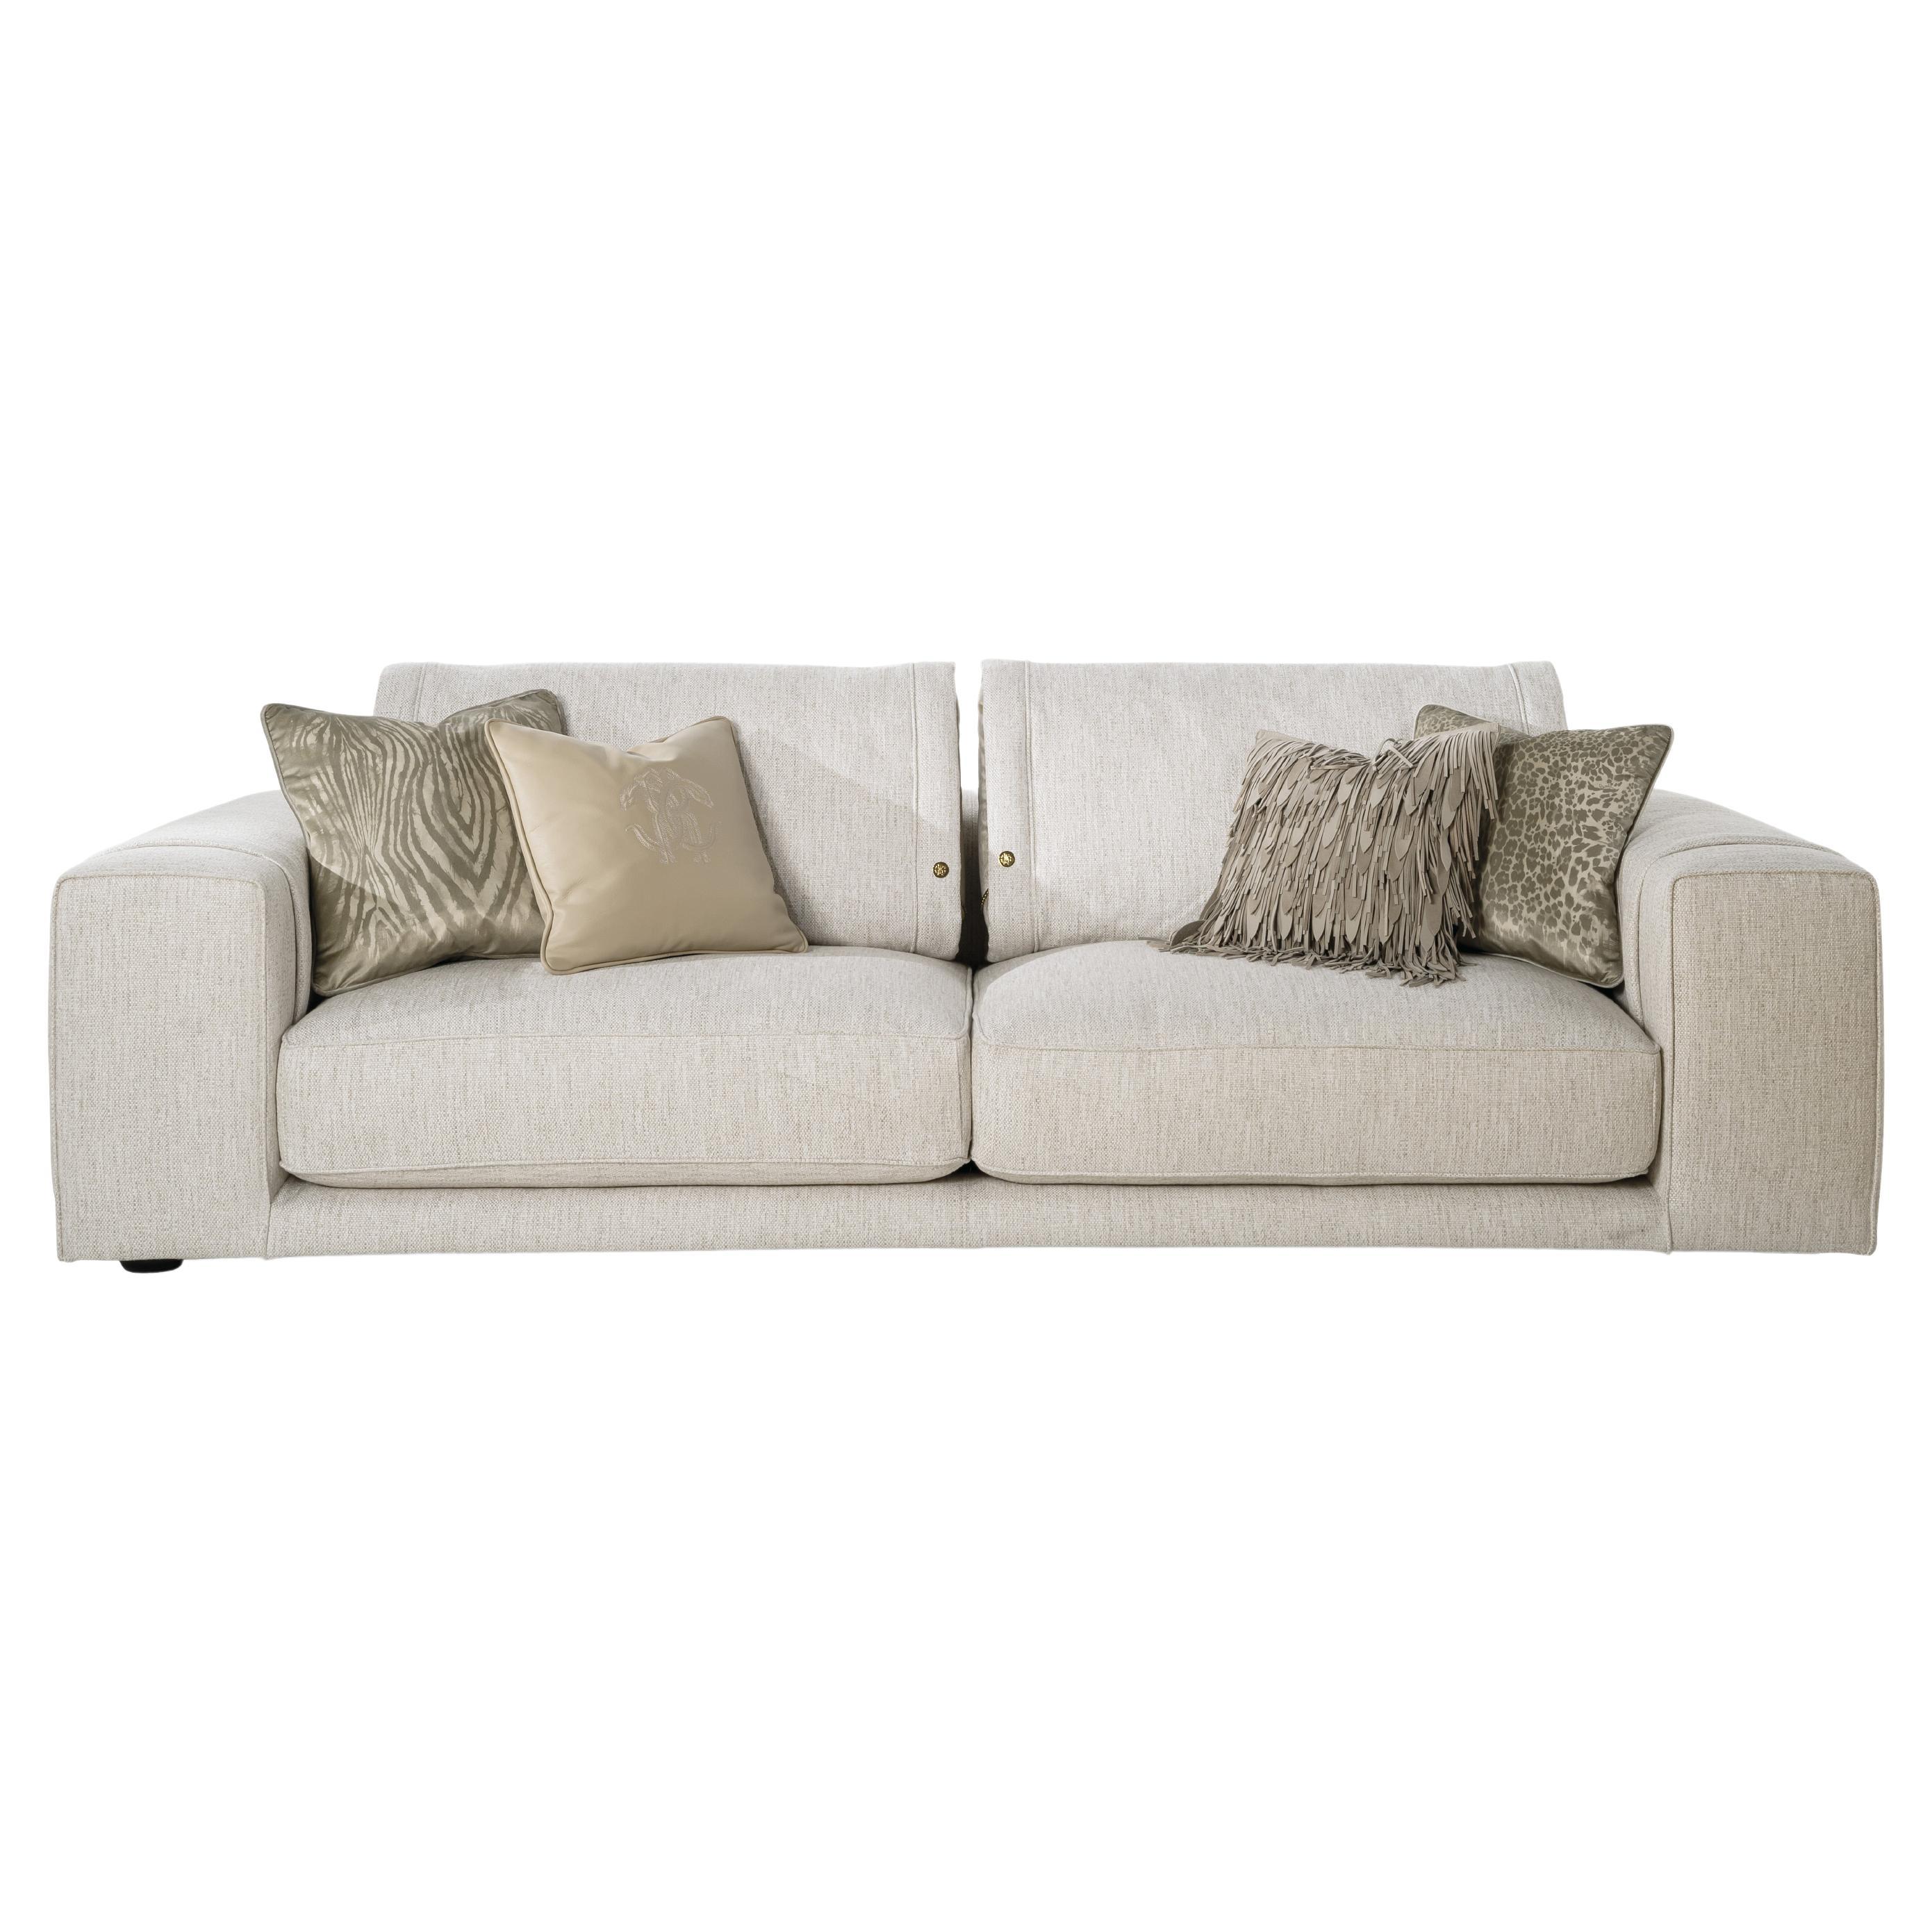 21st Century Smoking 2 Sofa in Fabric by Roberto Cavalli Home Interiors